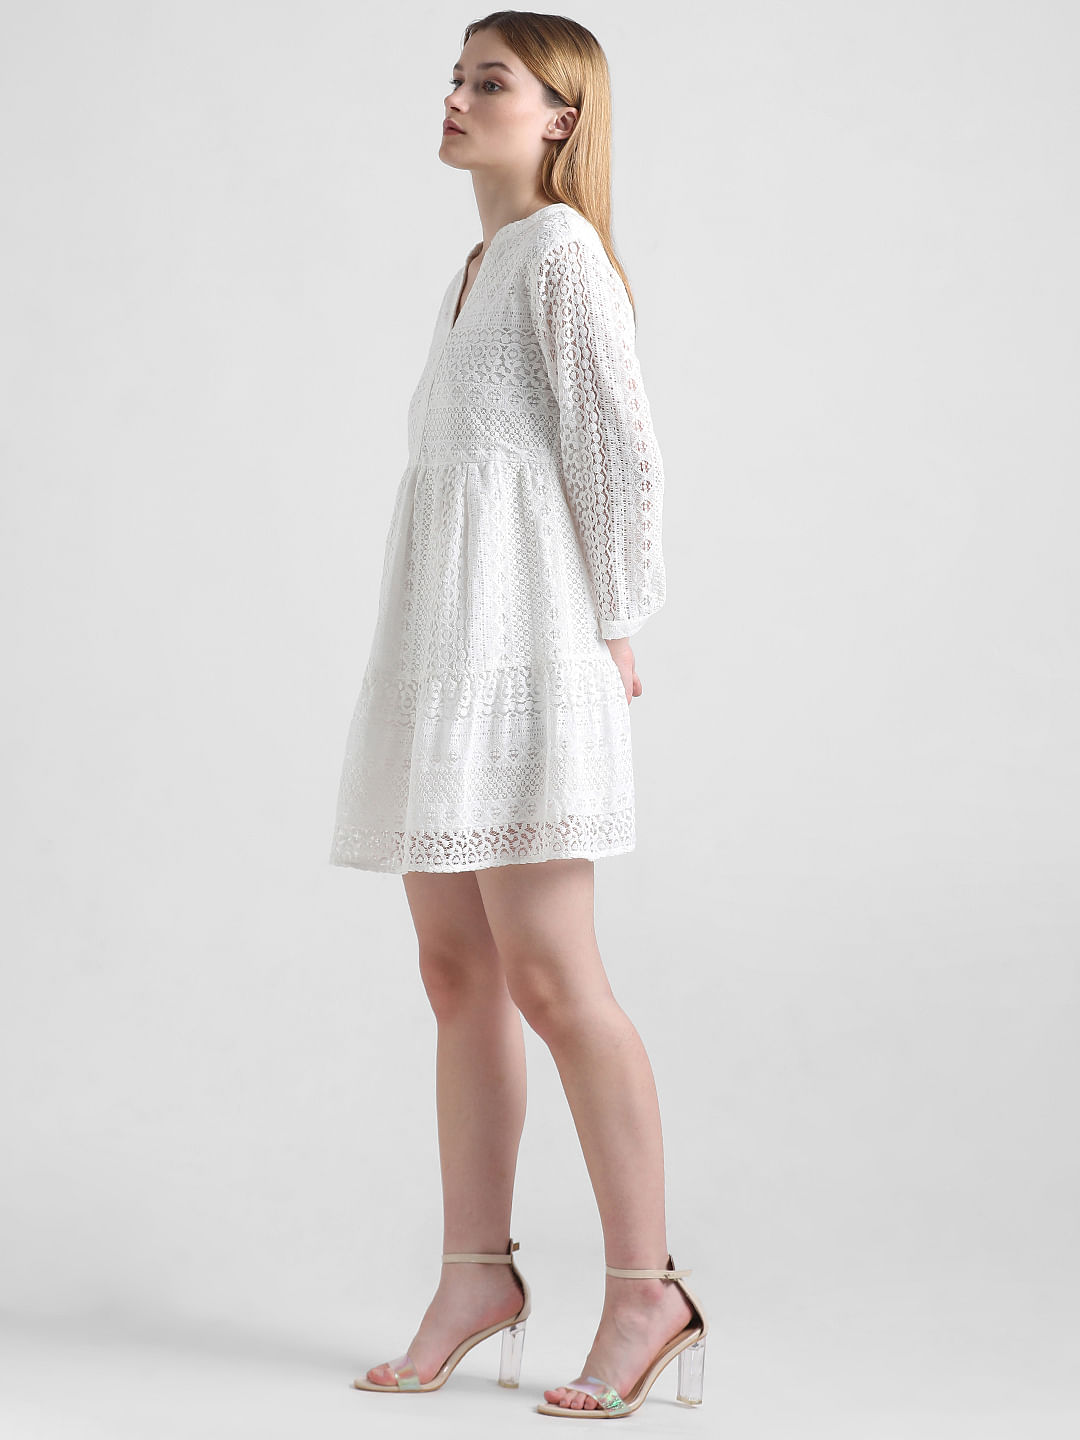 Anieshaya Midi Dress - V Neck Cut Out Lace Dress in White | Showpo USA